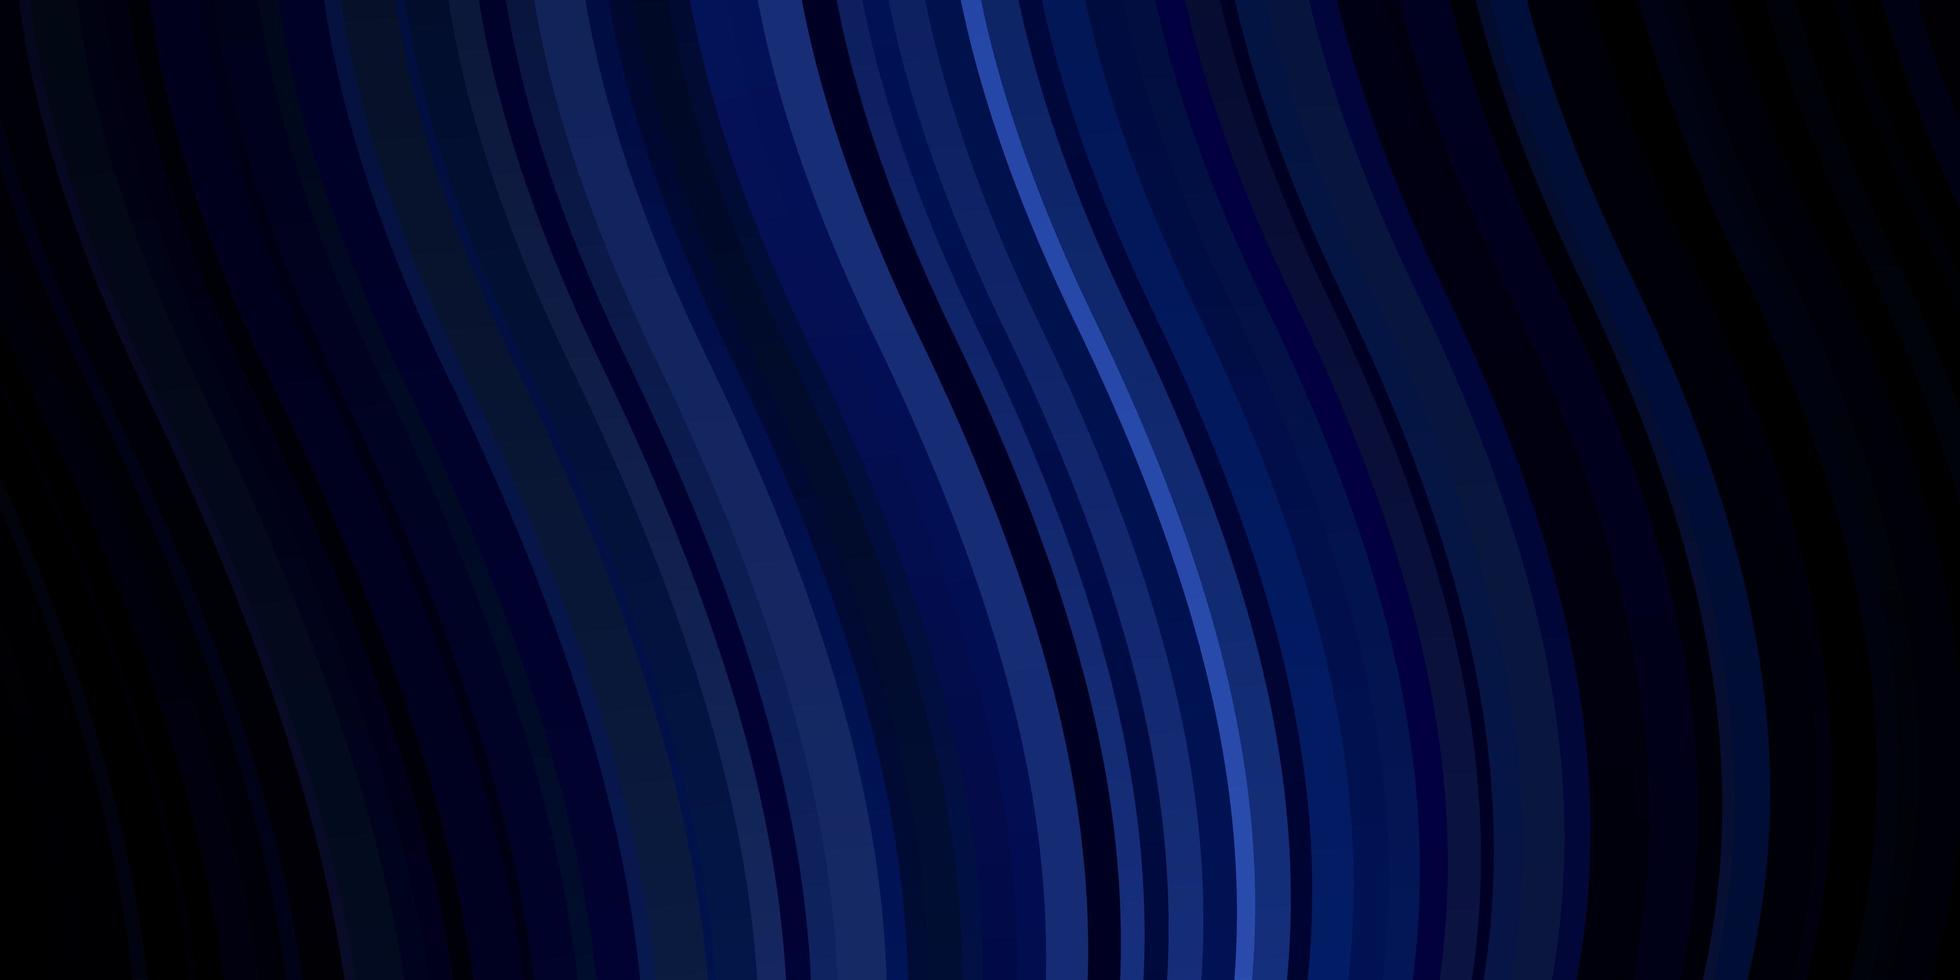 Telón de fondo de vector púrpura oscuro con ilustración colorida de arco circular en estilo abstracto con patrón de líneas dobladas para páginas de destino de sitios web